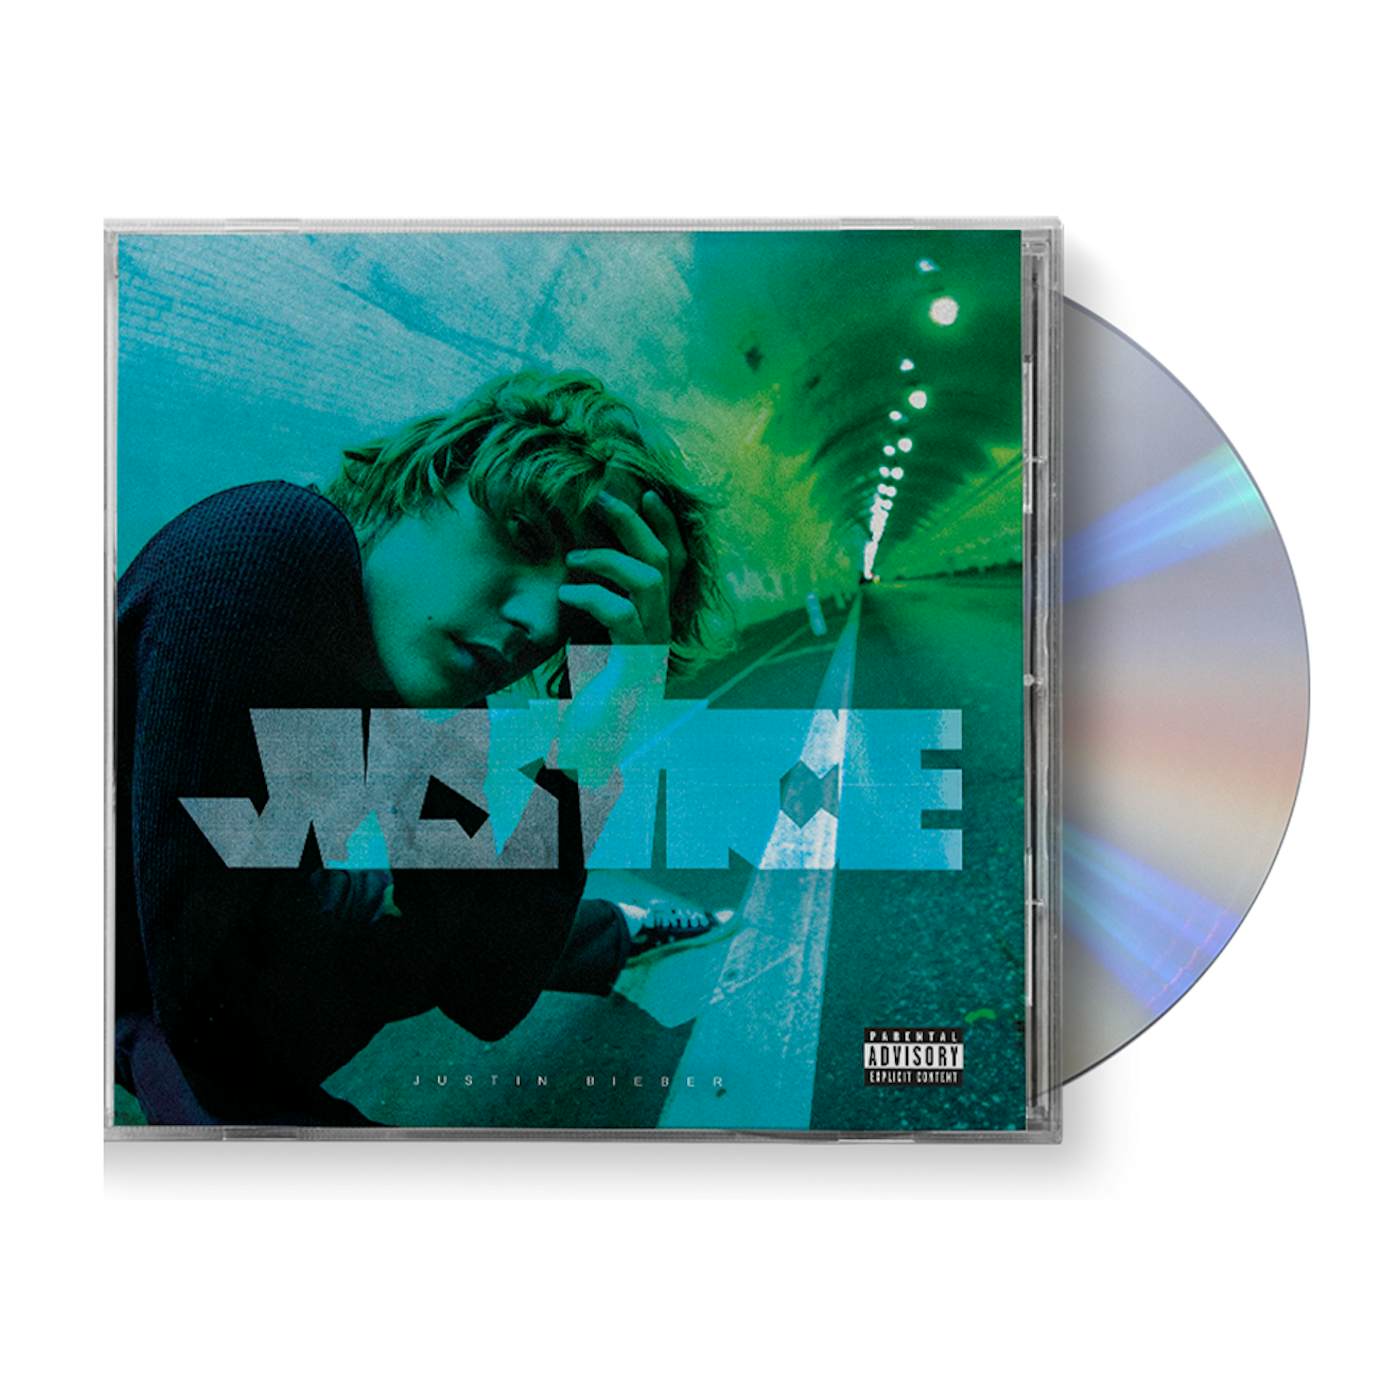 Justin Bieber JUSTICE ALTERNATE COVER I CD